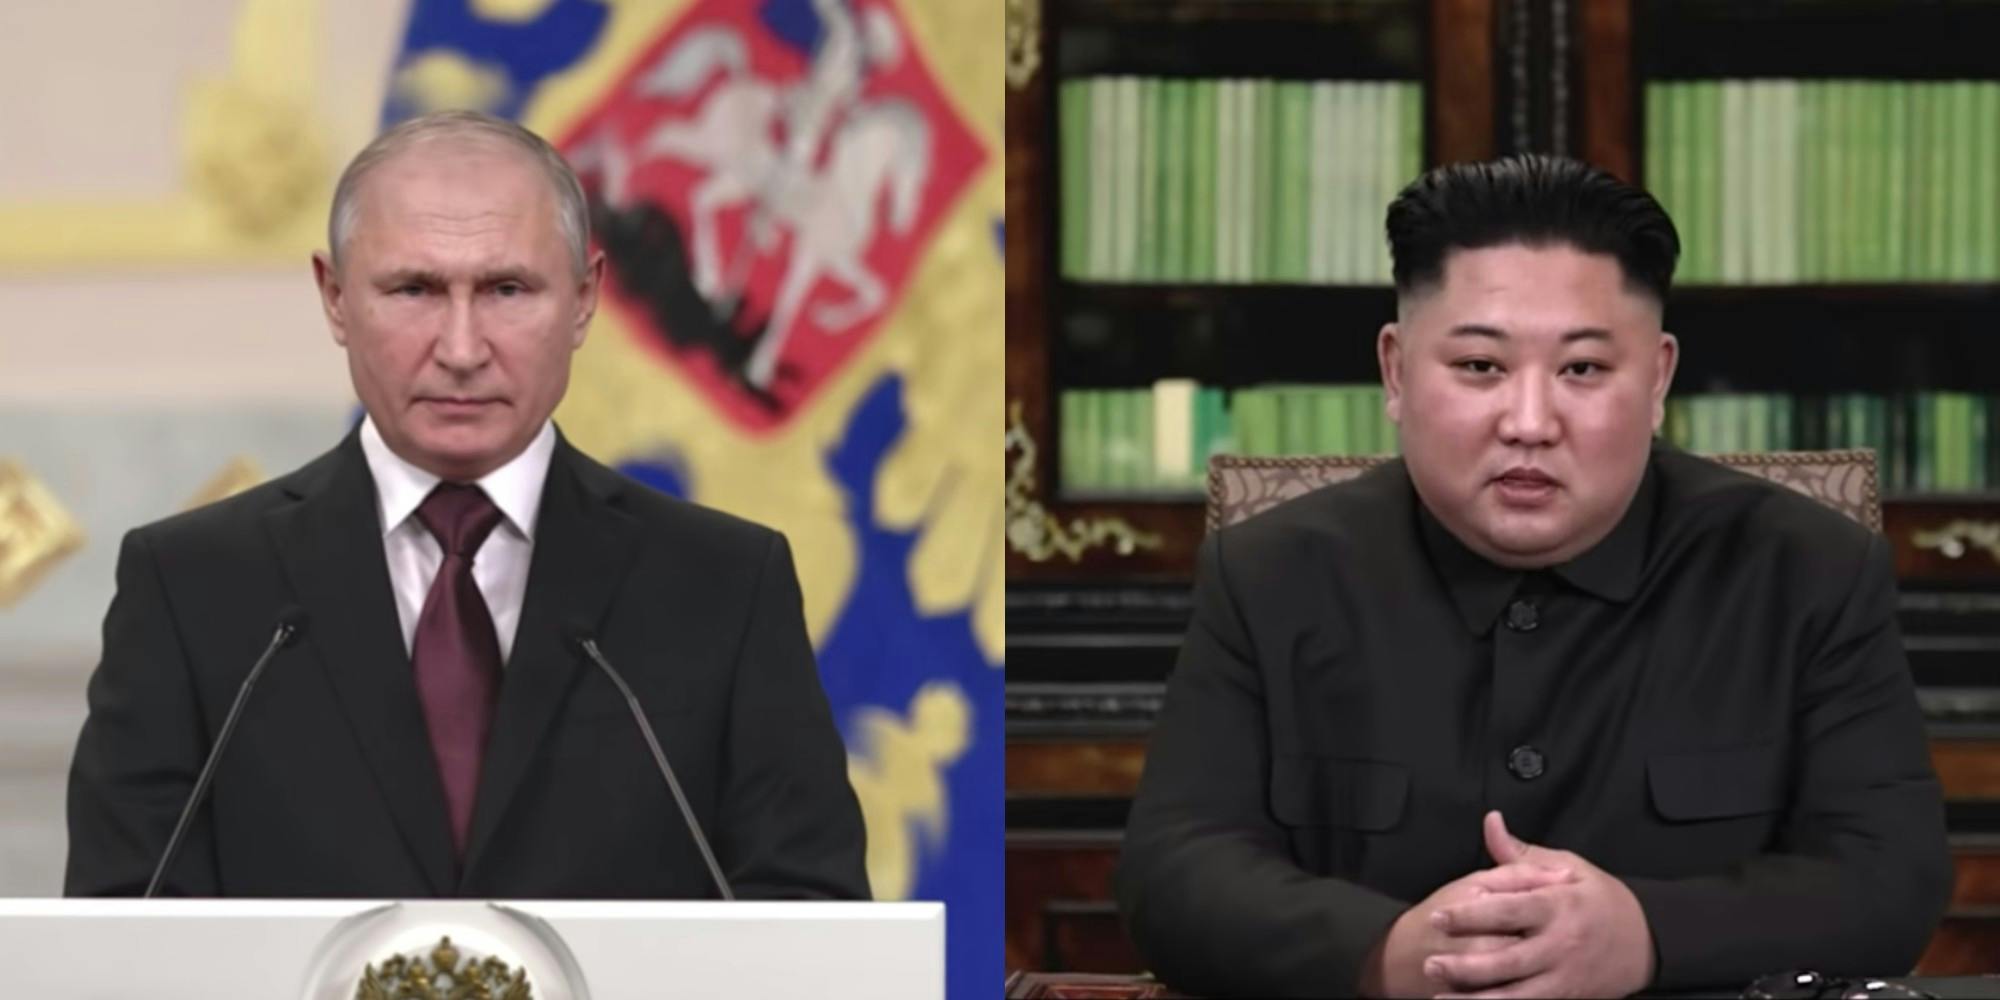 YouTube won't allow deepfake of Kim Jong Un discussing U.S. voter suppression